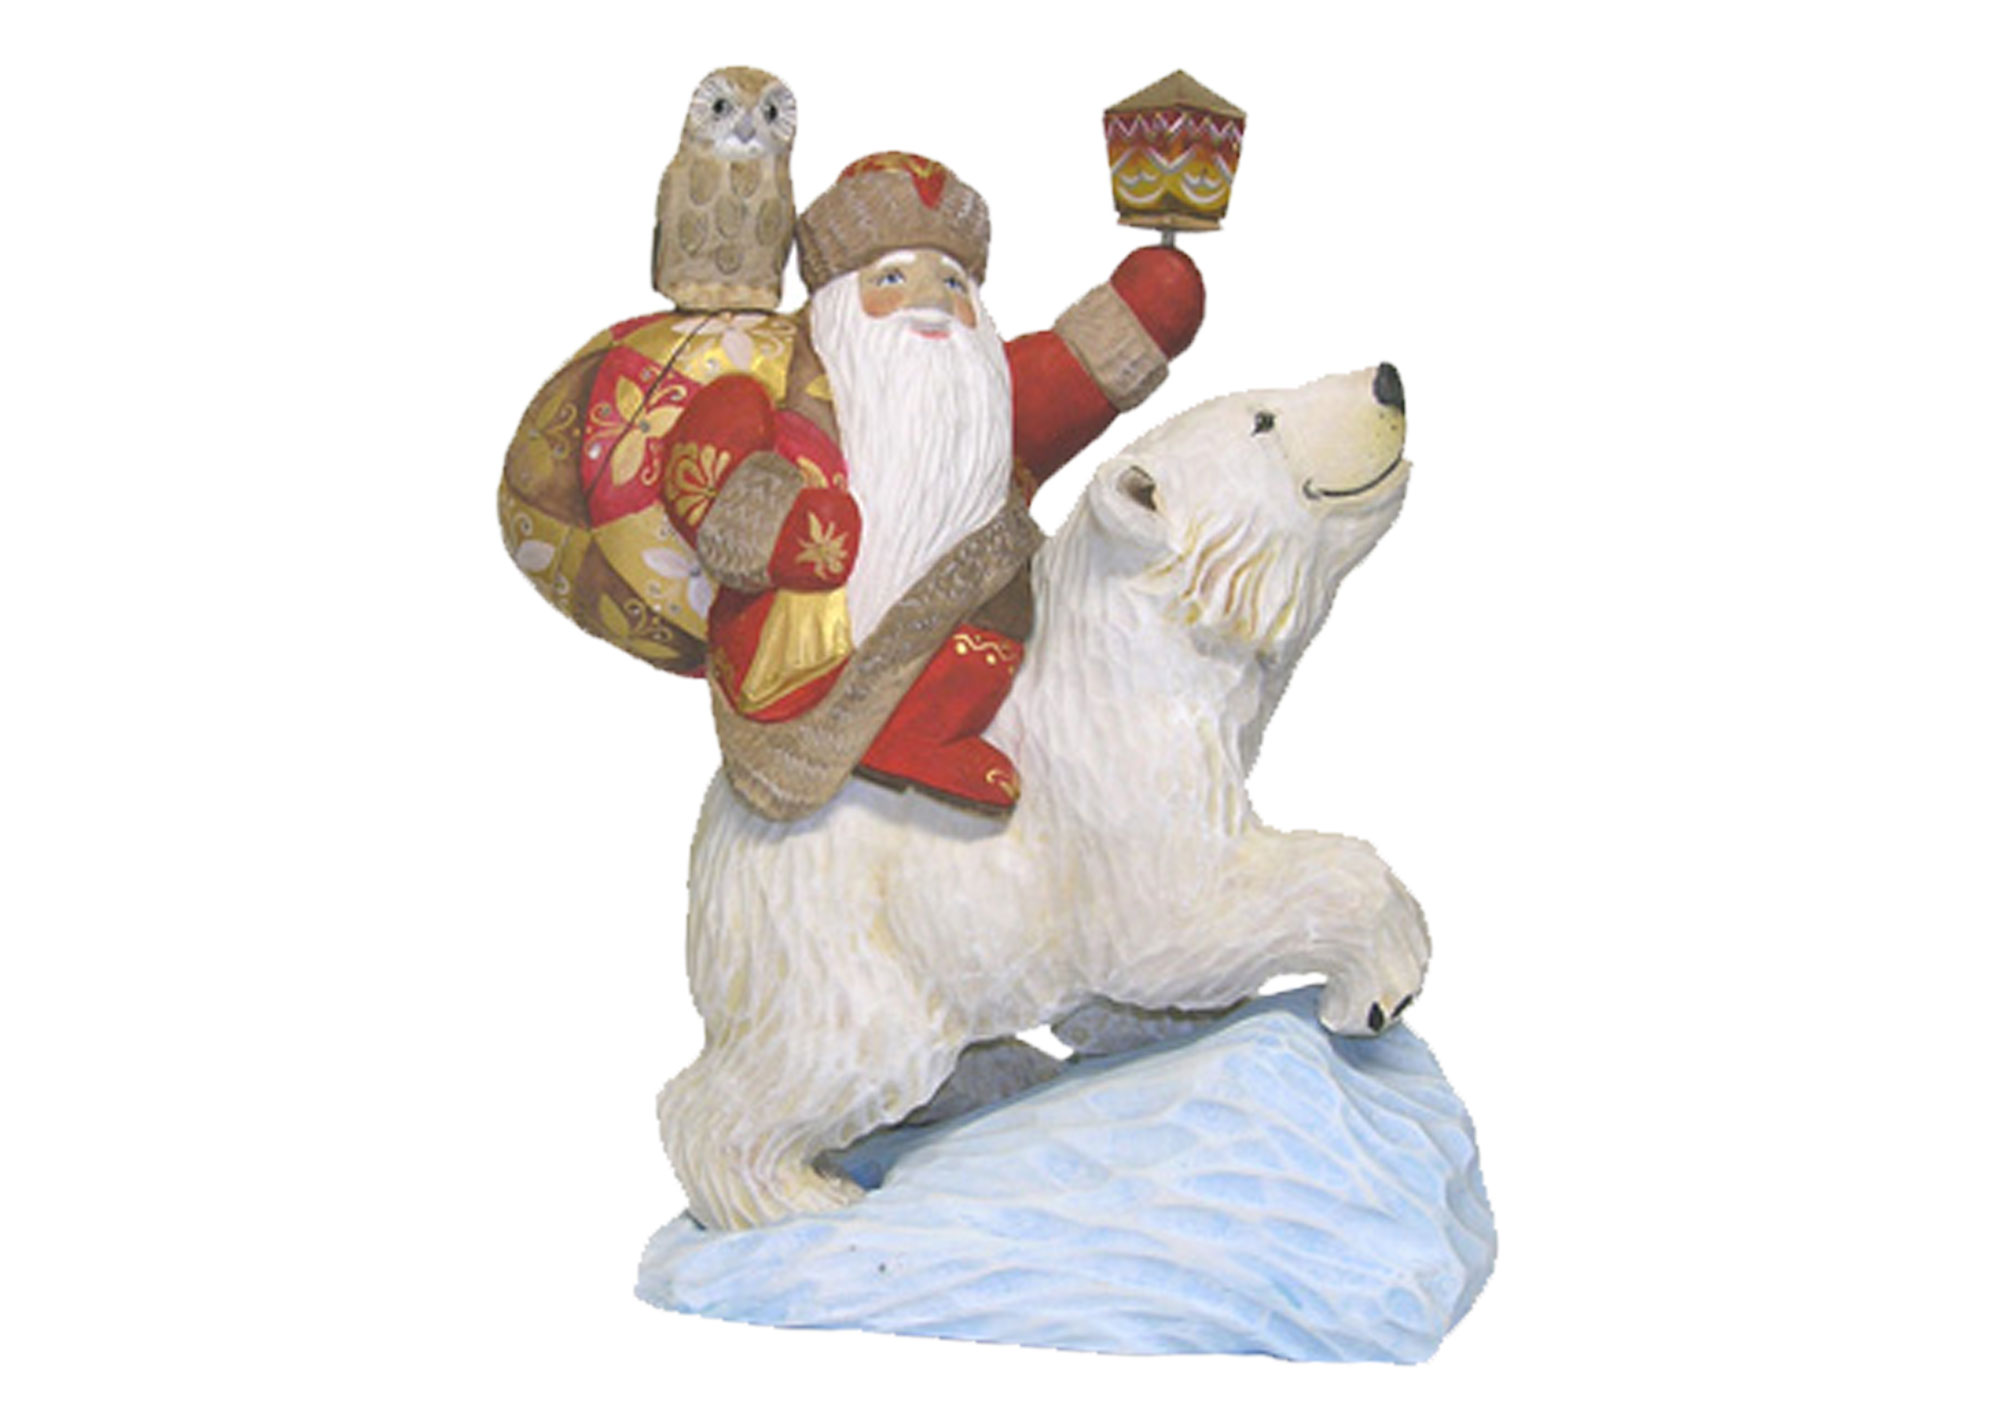 Buy Santa Box "Through Snow and Ice to Christmas Lights" at GoldenCockerel.com